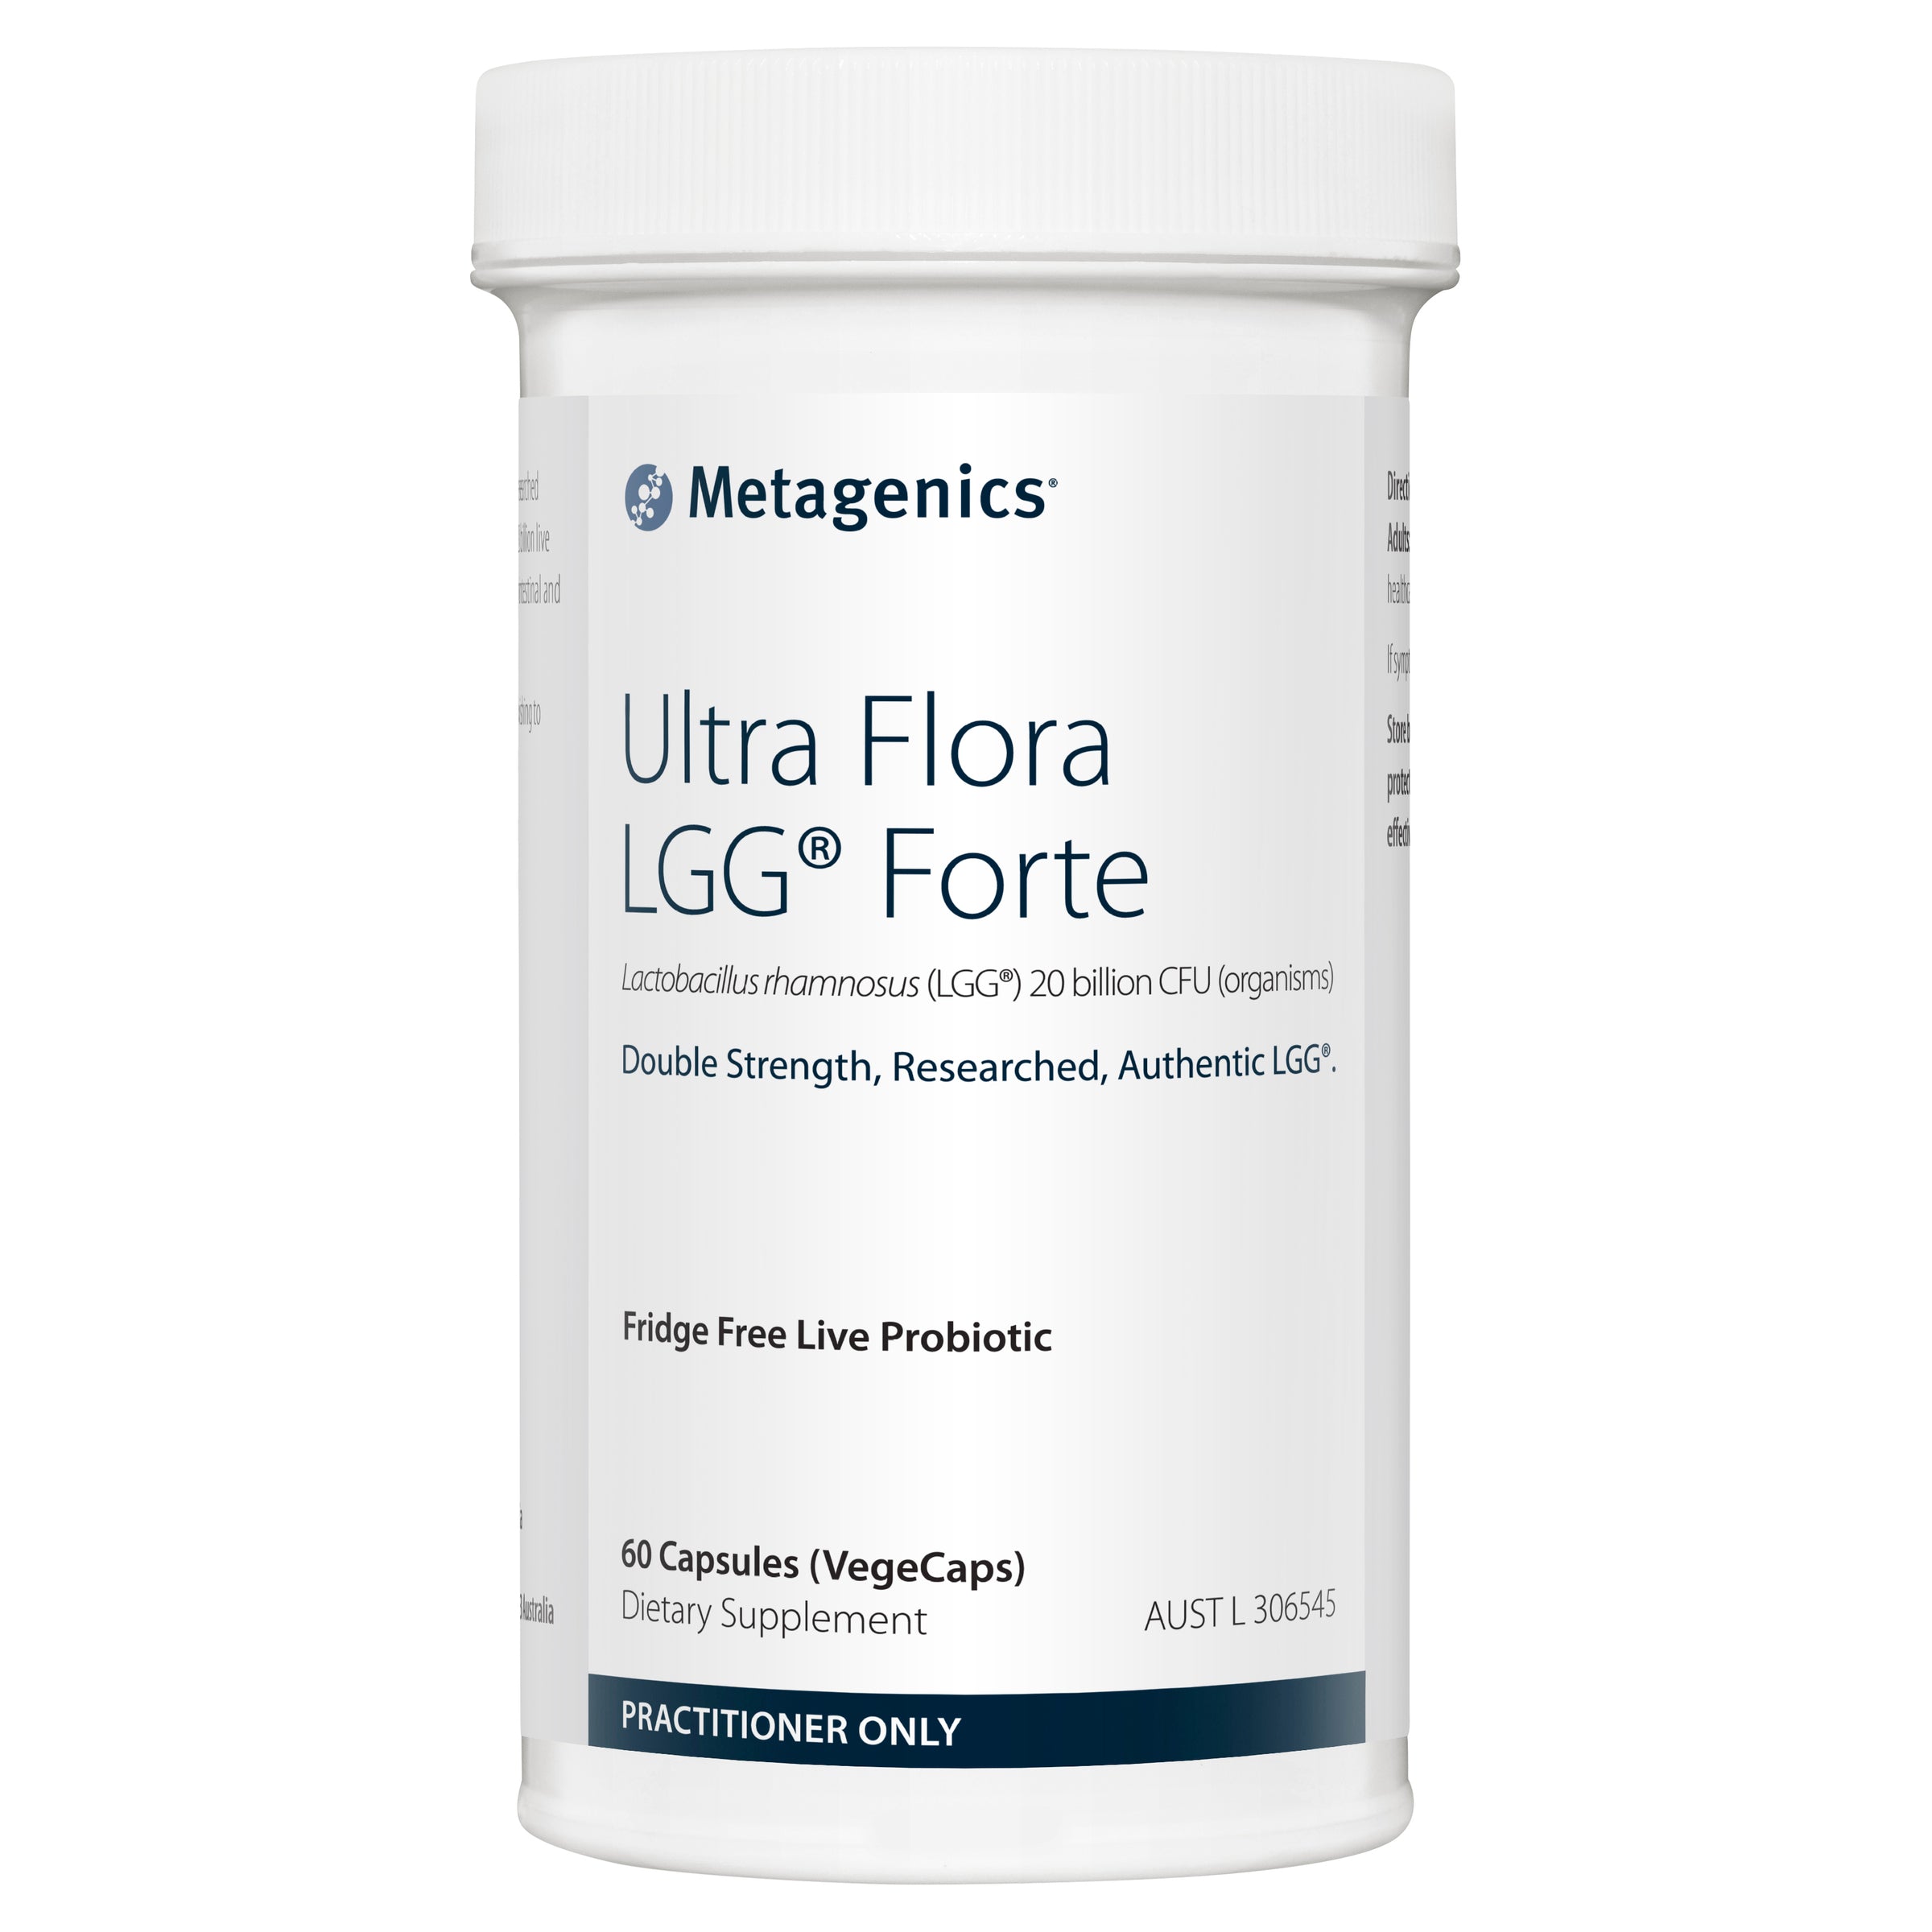 Metagenics Ultra Flora LGG Forte 60 Capsules (VegeCaps)